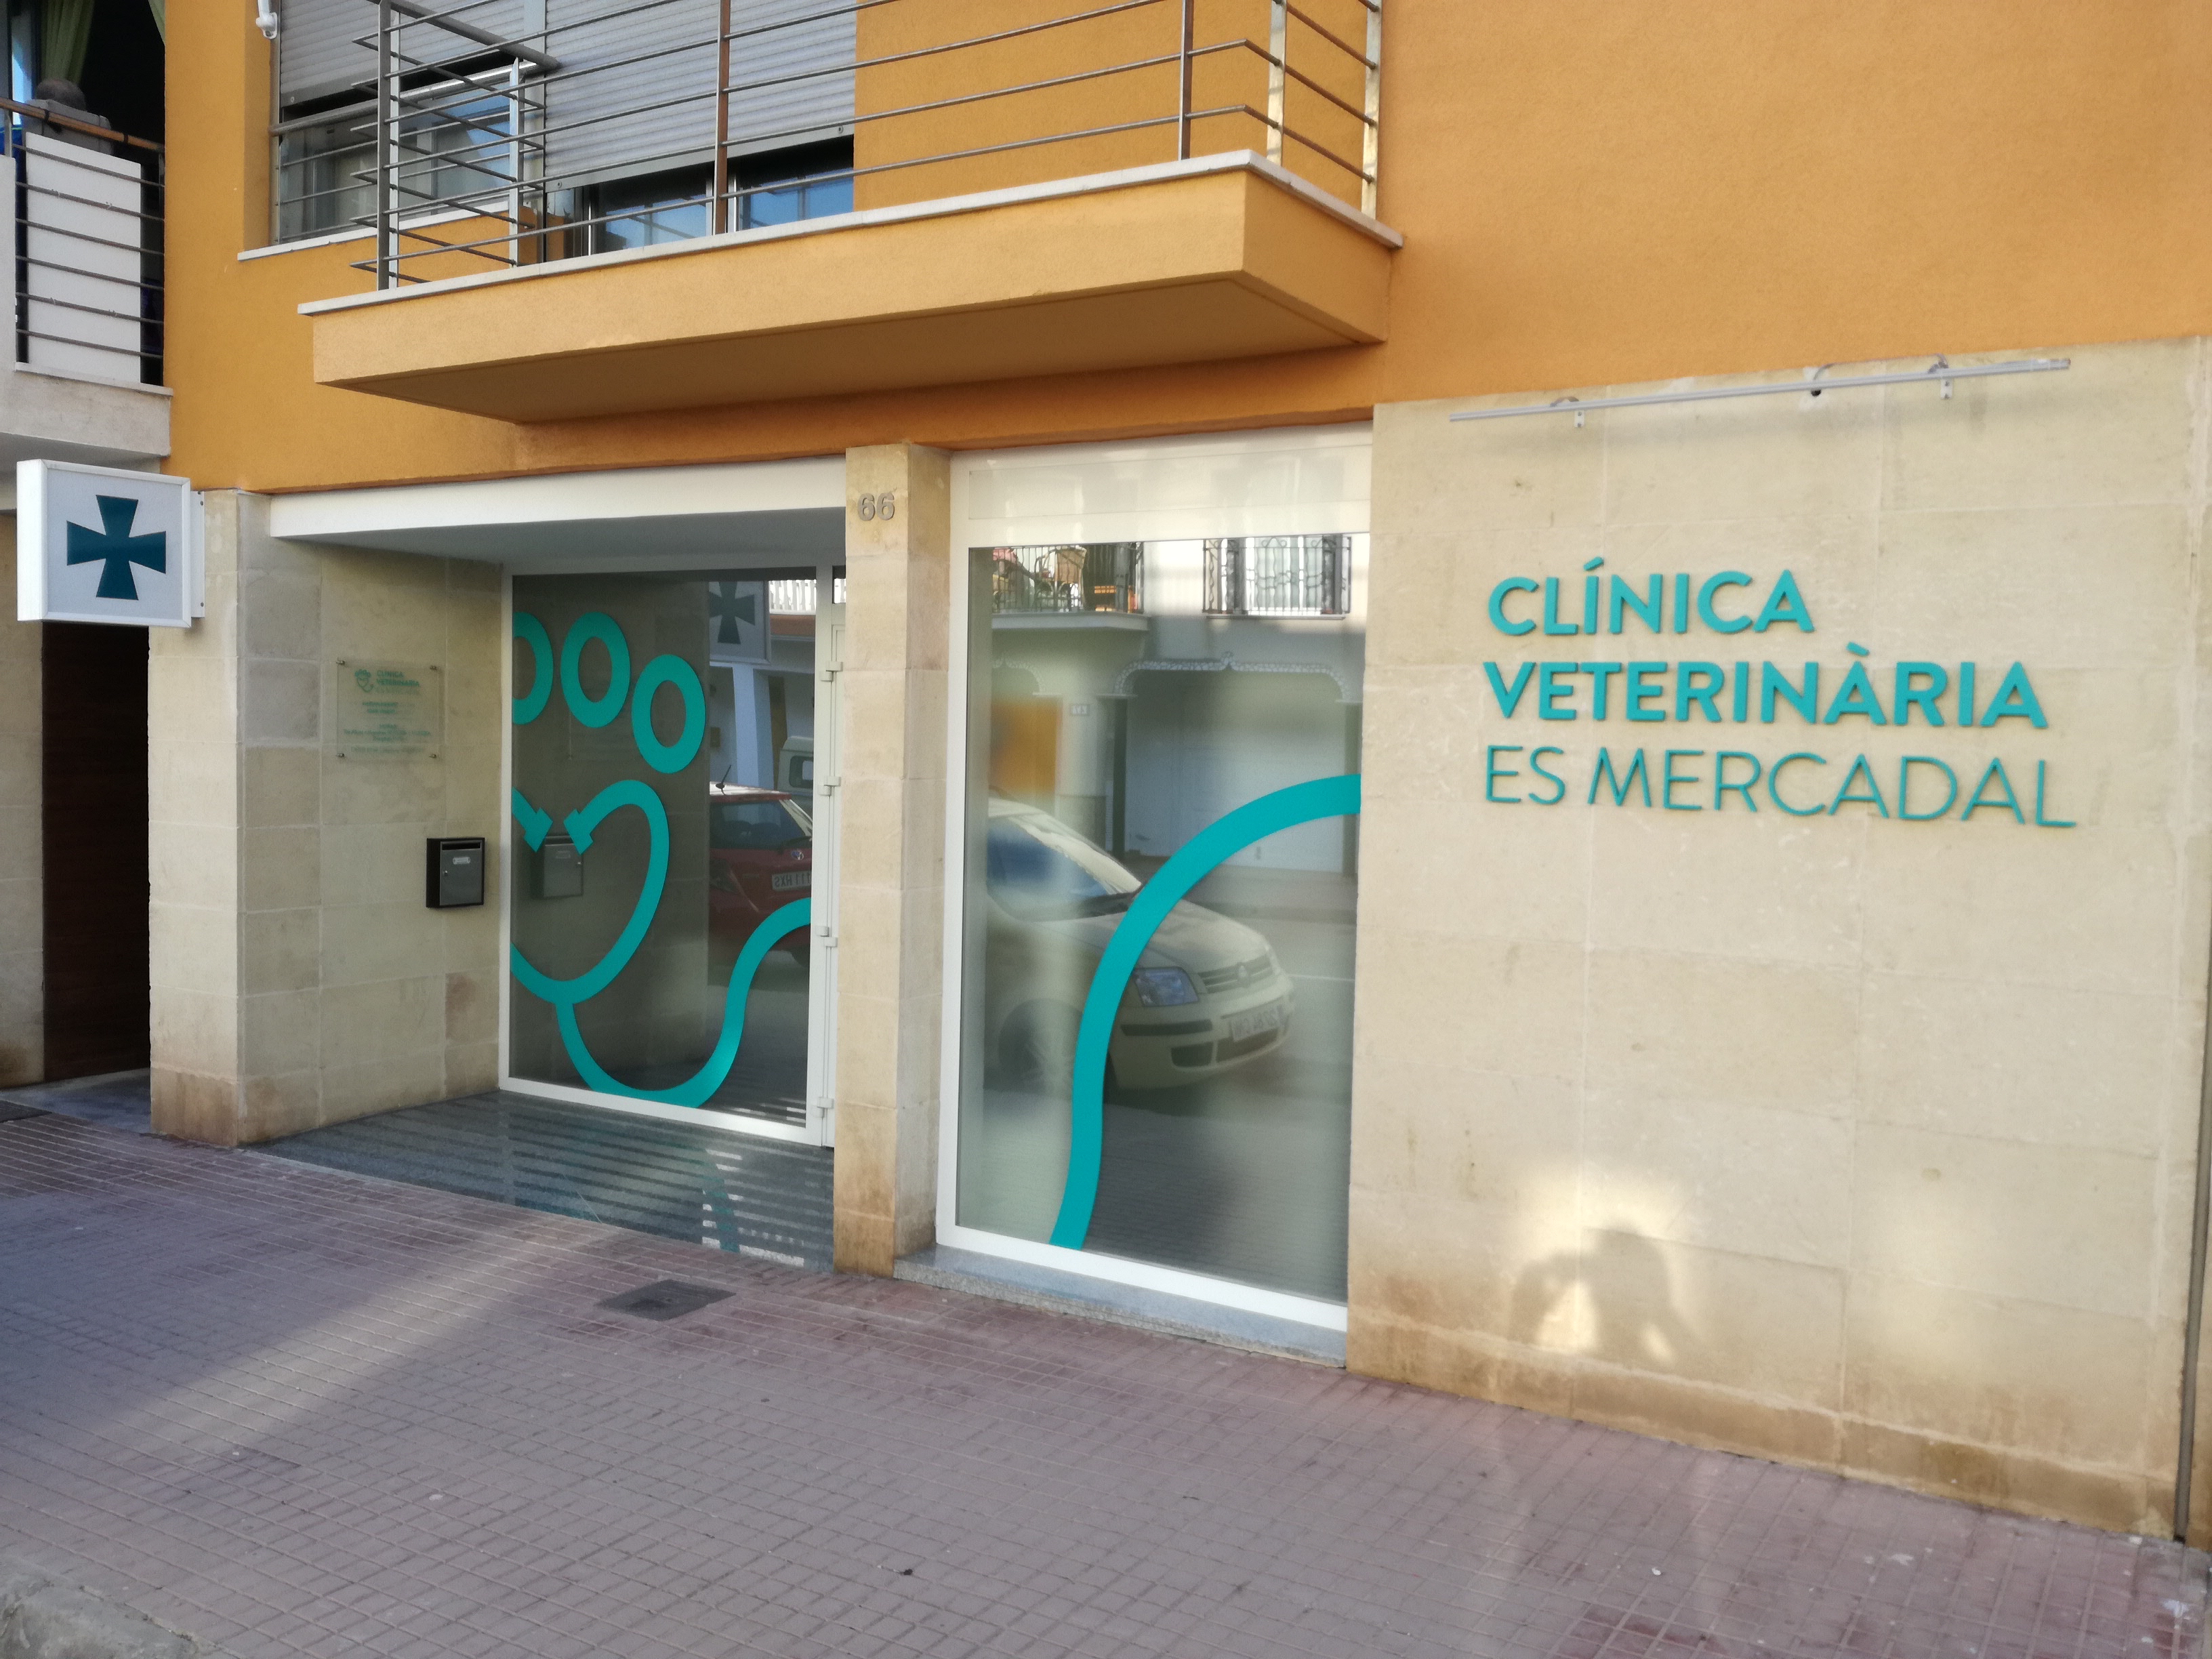 Images Clínica Veterinaria Es Mercadal